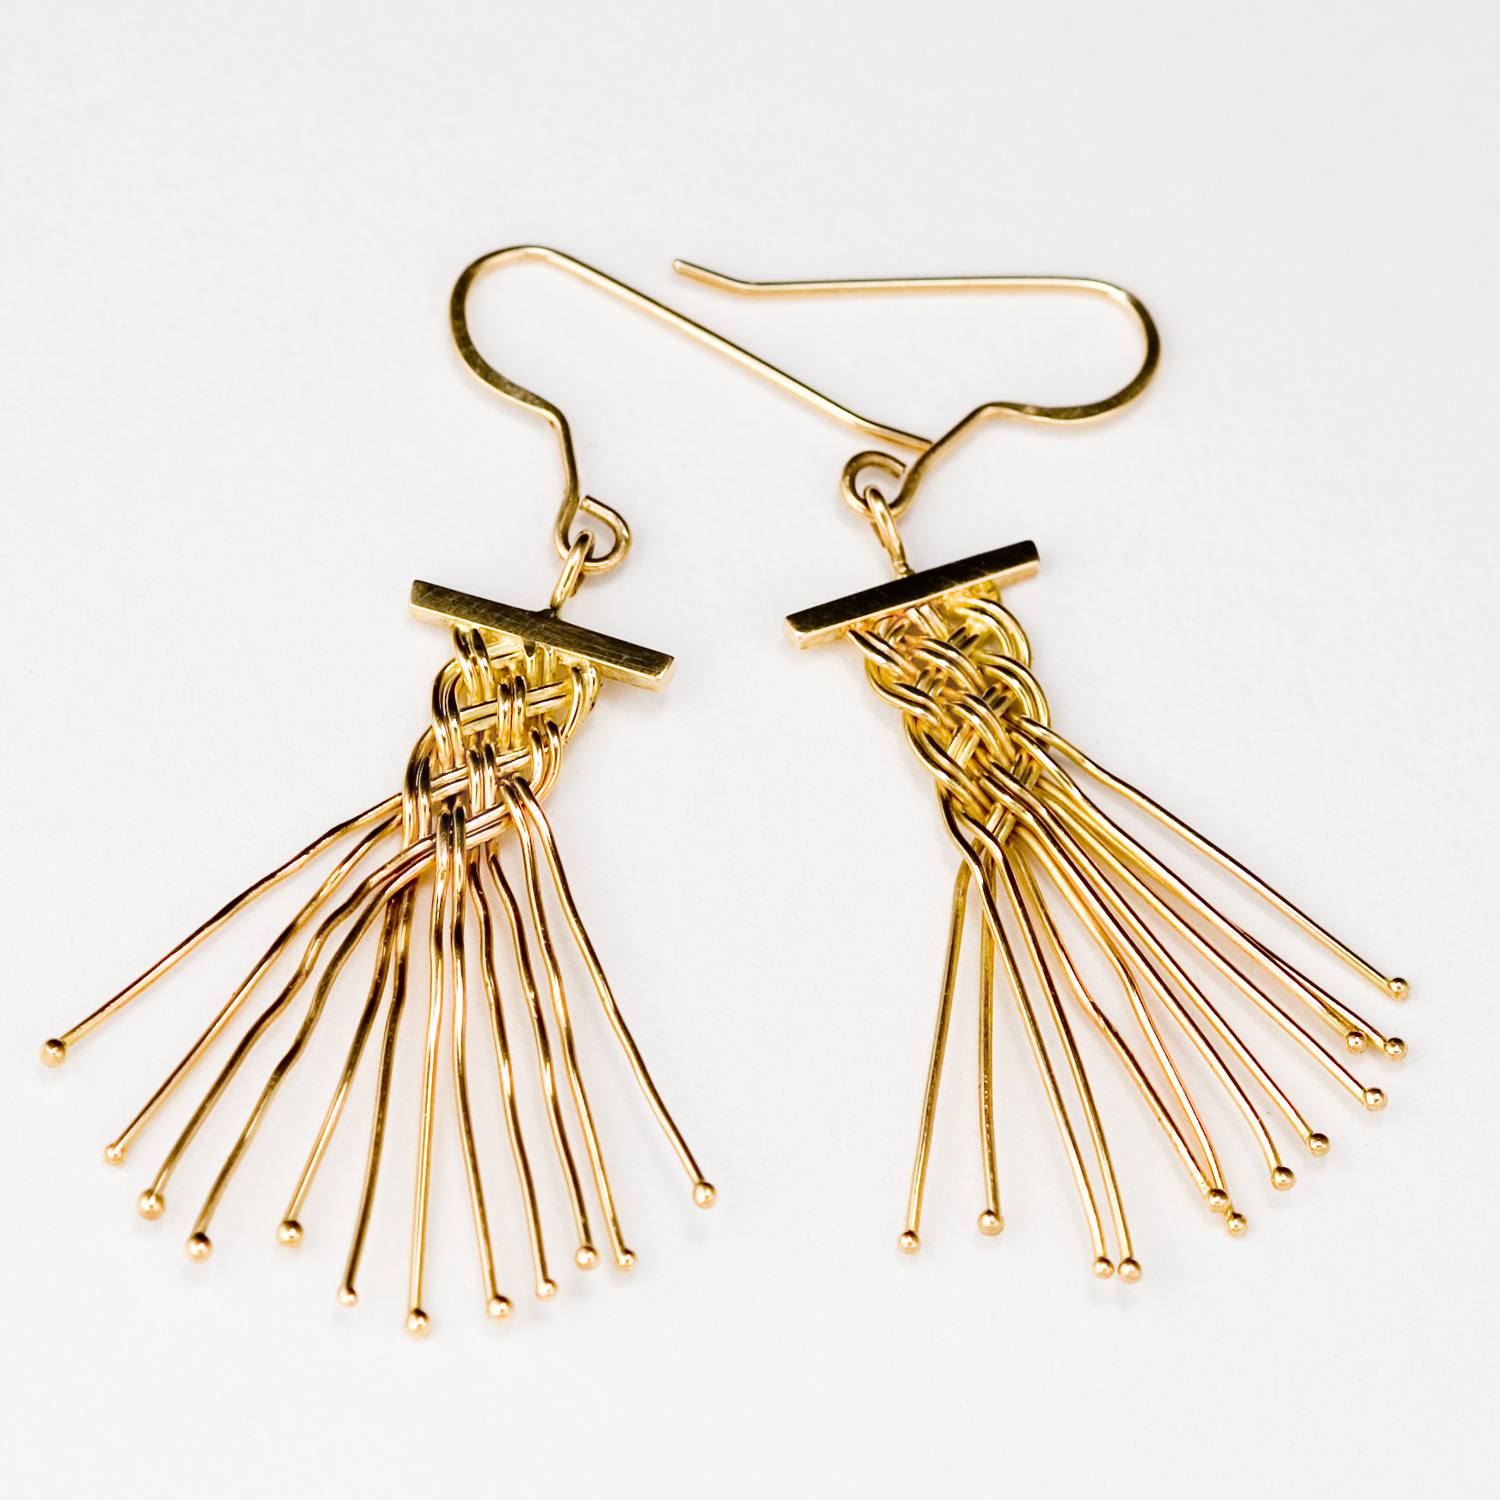 Sunburst Weave Stud Earrings in 18k gold with diamonds by Tamberlaine